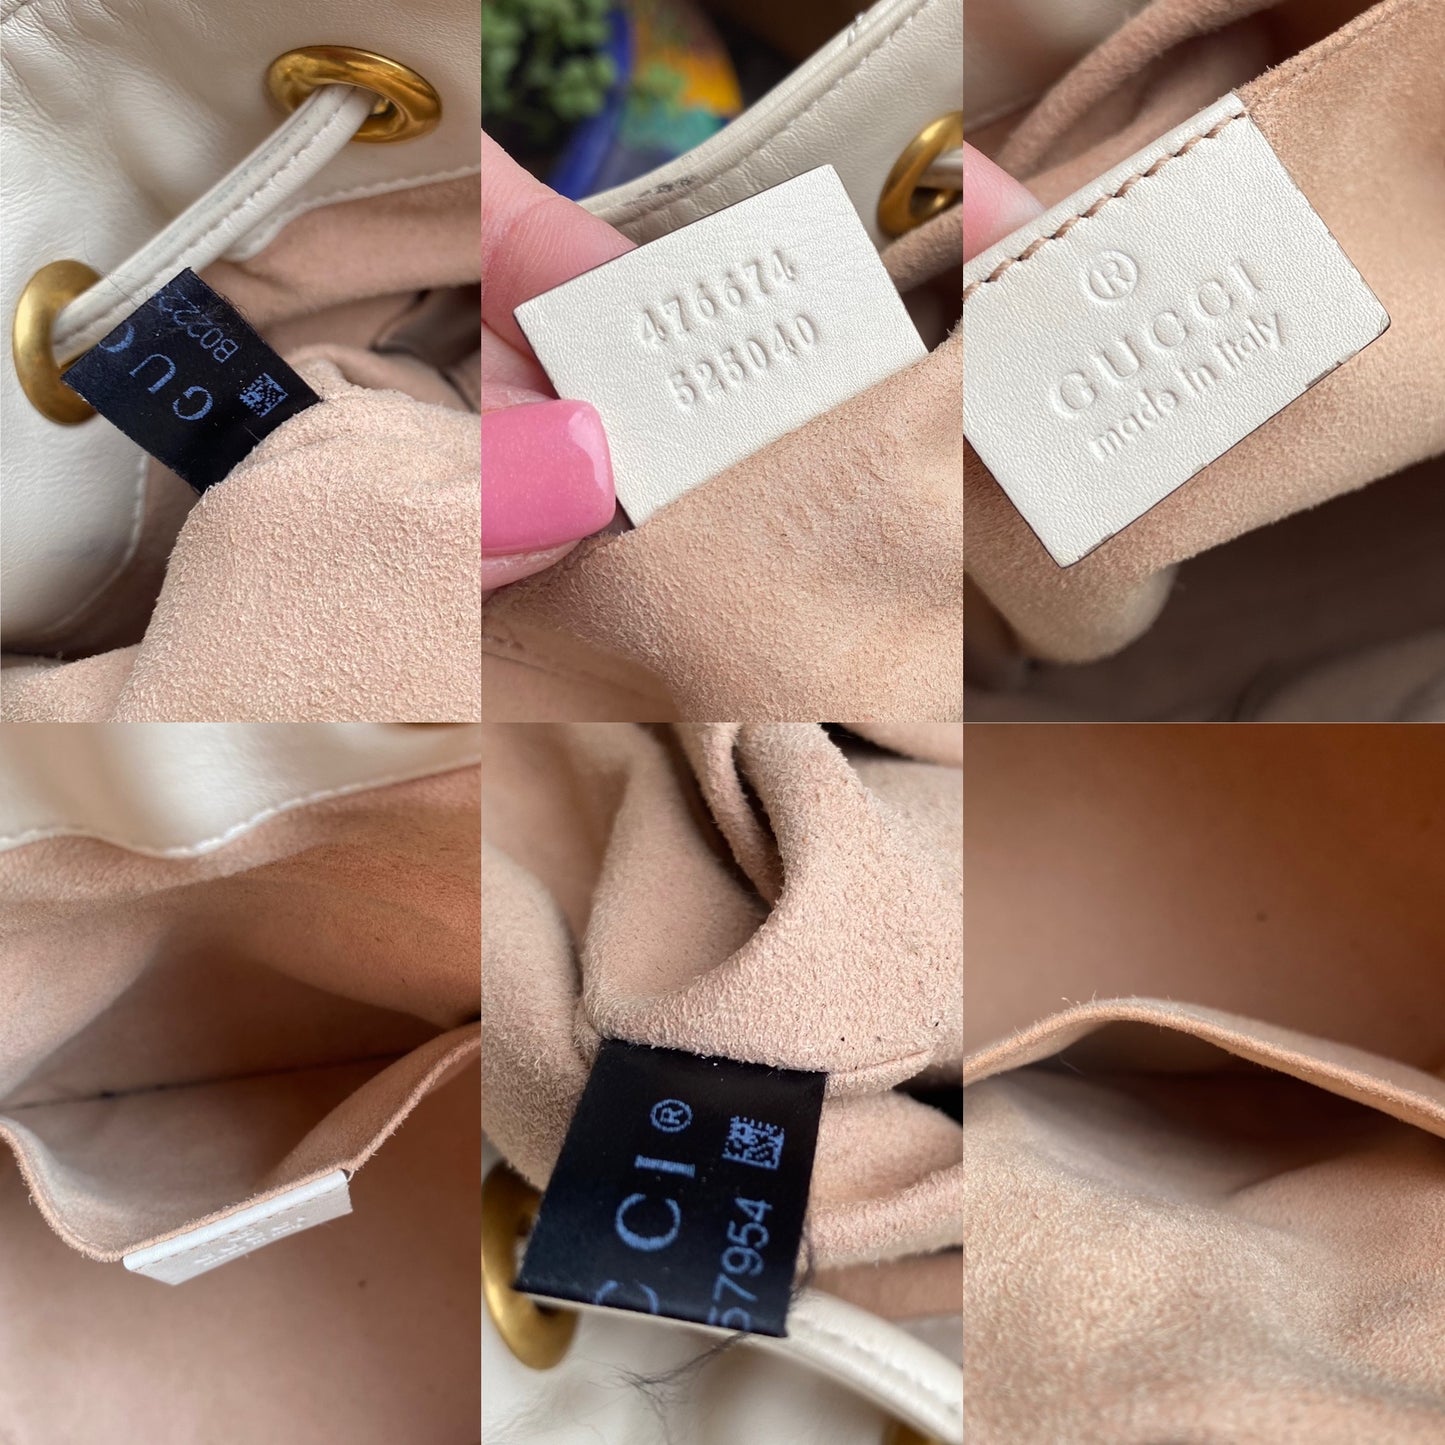 Gucci GG Marmont Matelassé Sylvie Web Drawstring Bucket Bag